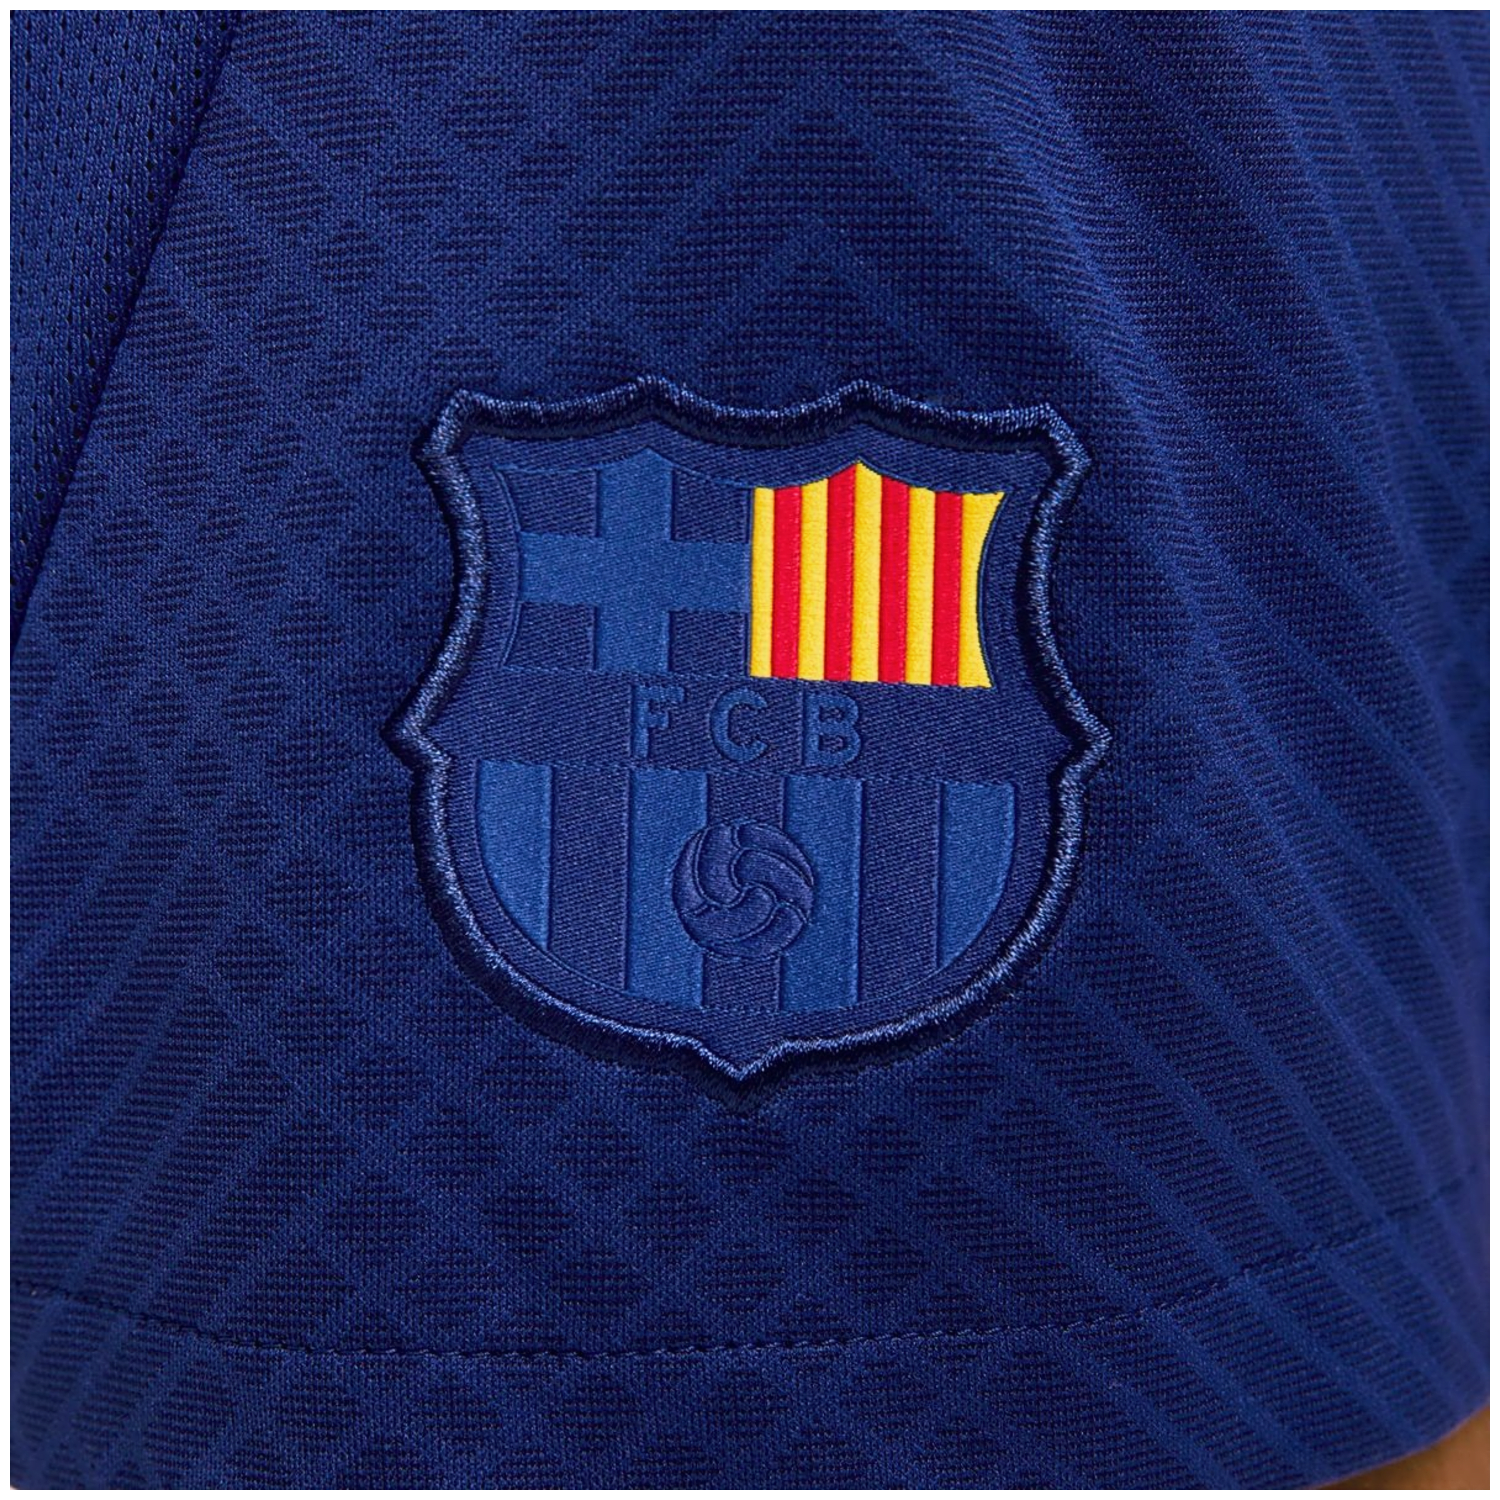 Nike FC Barcelona Strike Dri-FIT Herren Fußballhose